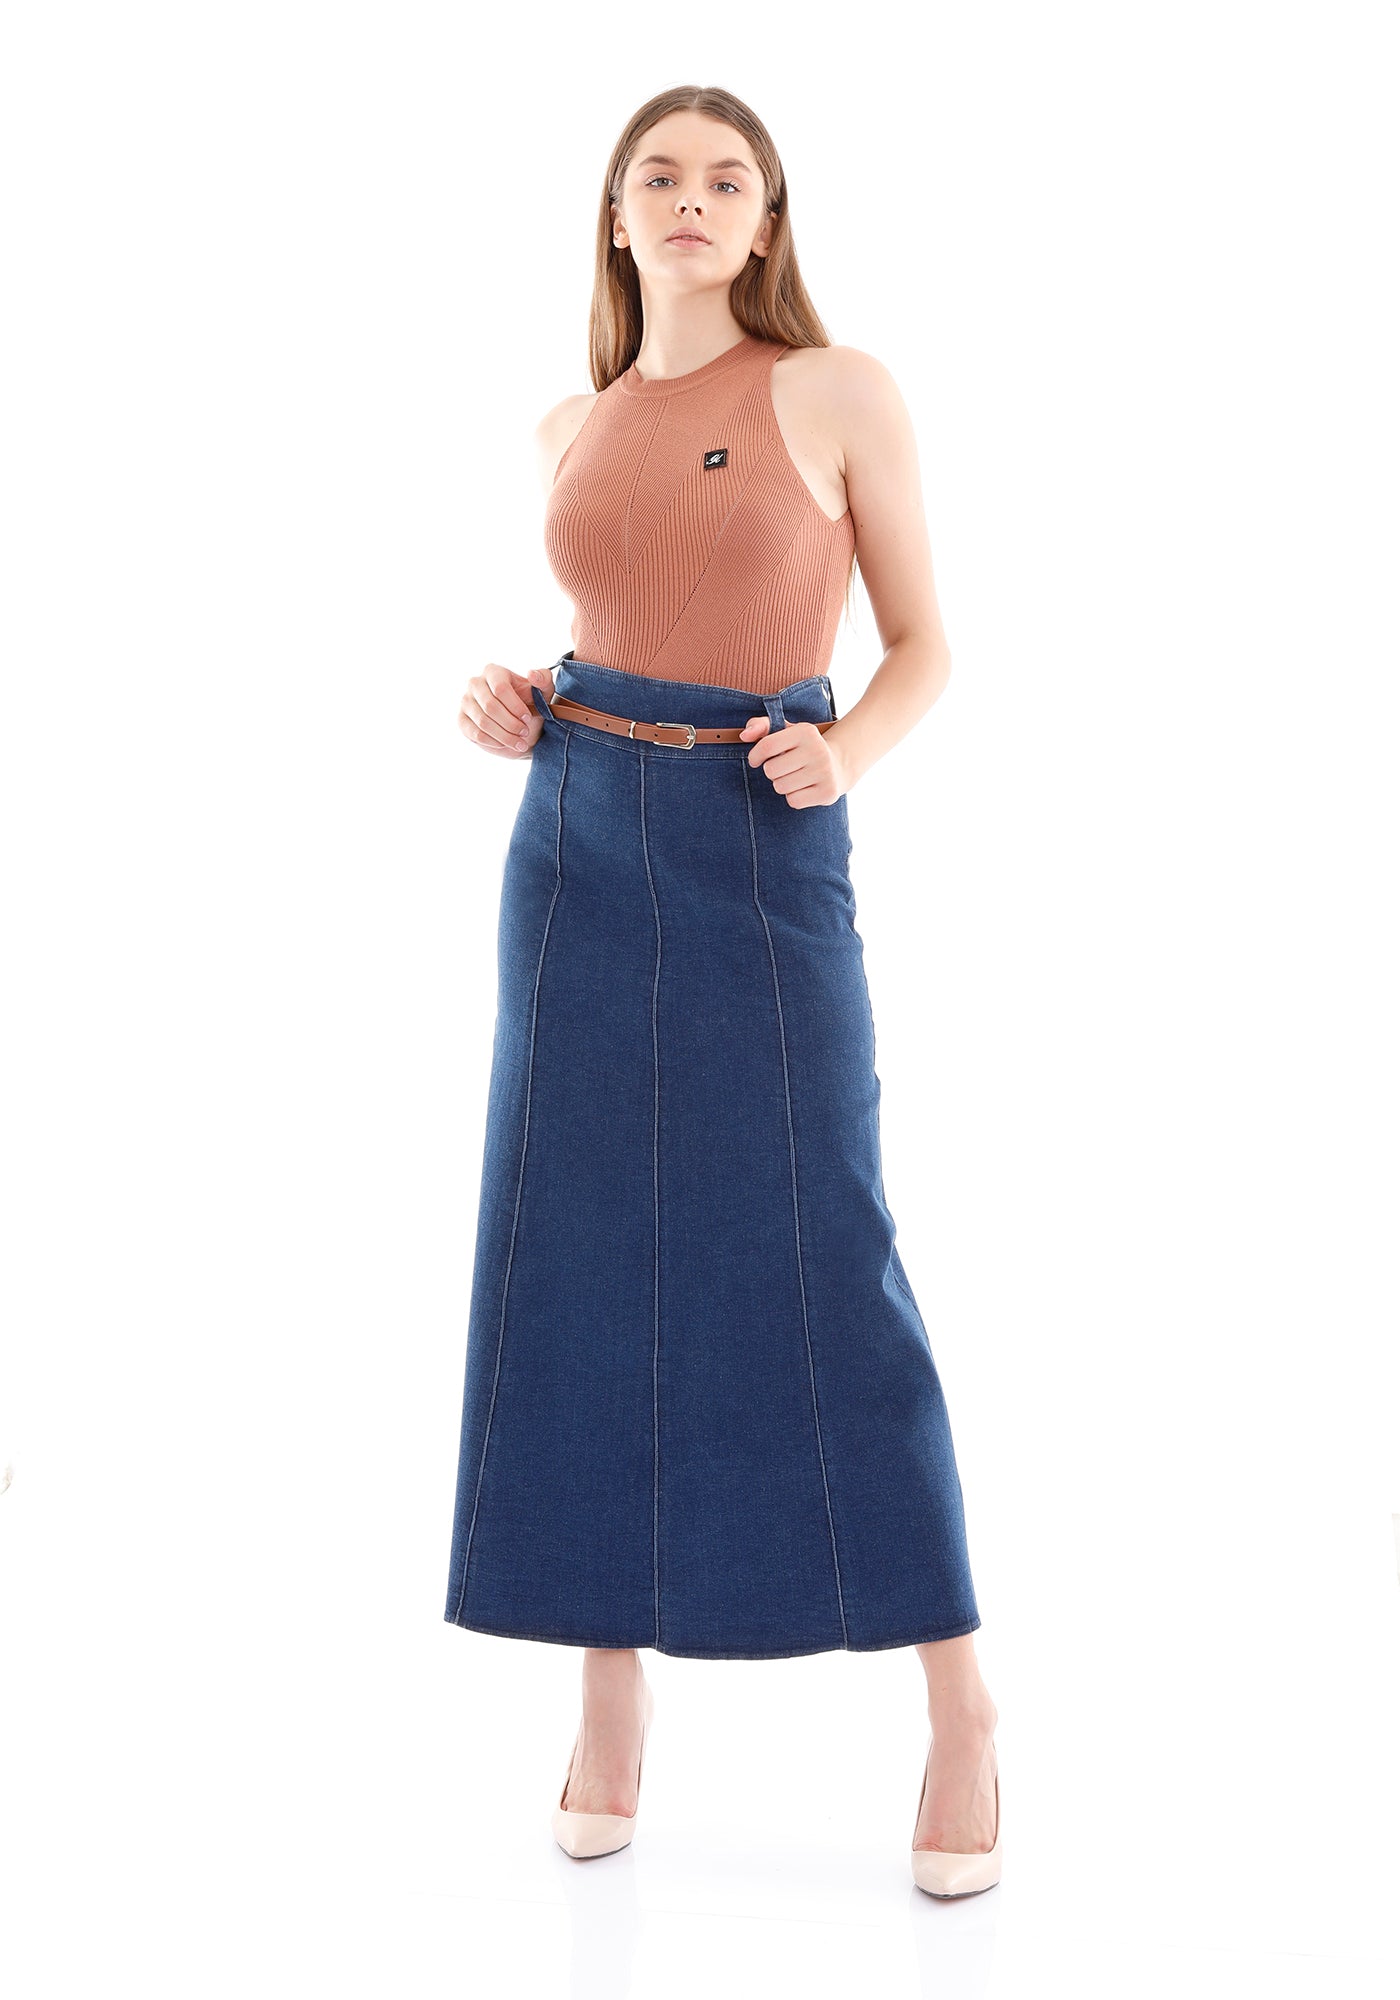 Maxi High Waisted Blue Jean Skirt Eight Gores Panels Flare Skirt with Belt Guzella